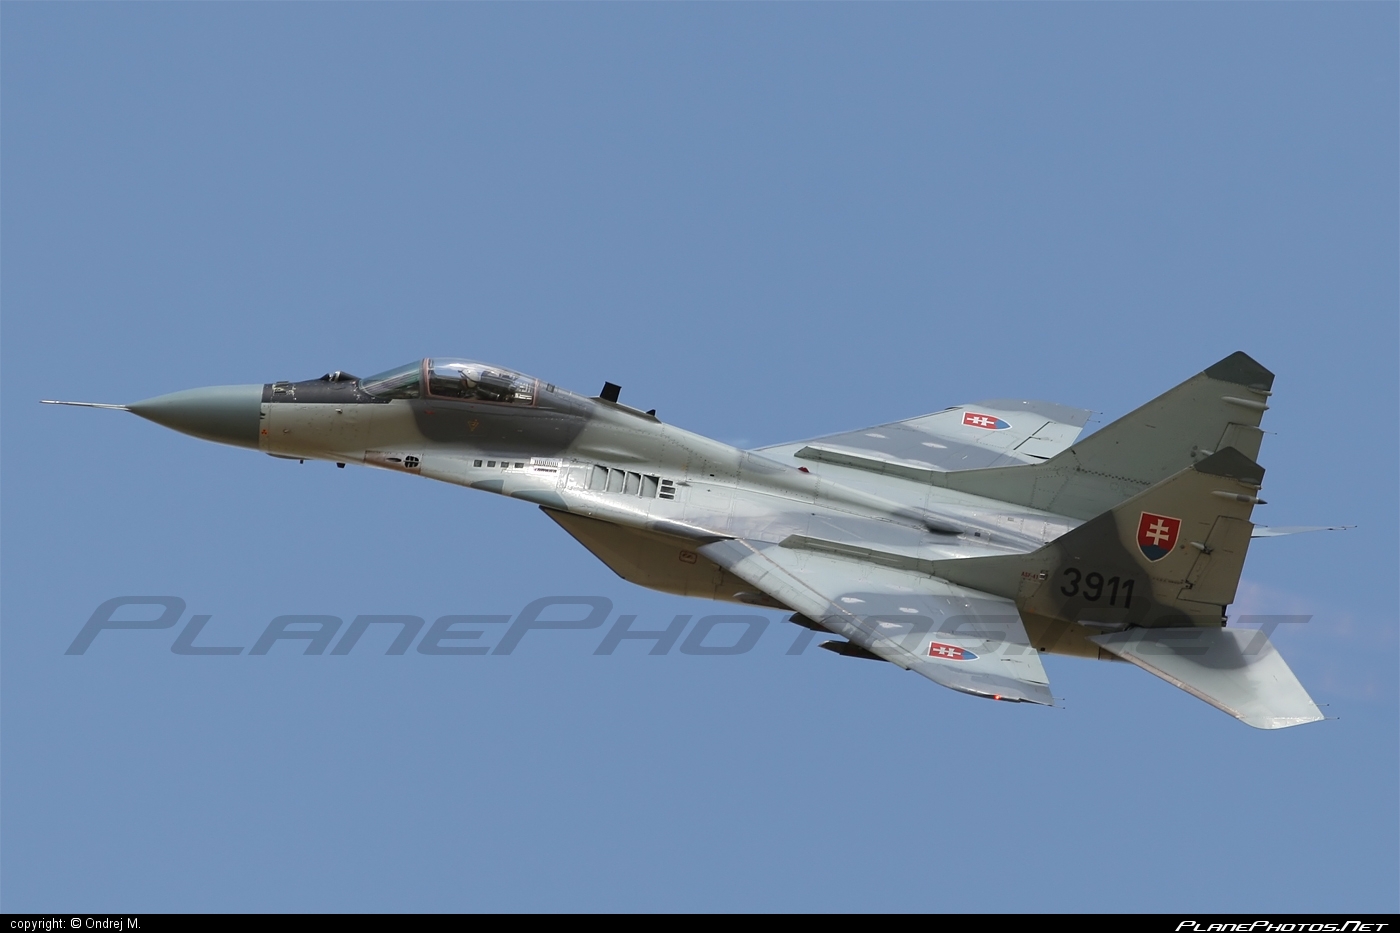 Mikoyan-Gurevich MiG-29AS - 3911 operated by Vzdušné sily OS SR (Slovak Air Force) #mig #mig29 #mig29as #mikoyangurevich #slovakairforce #vzdusnesilyossr